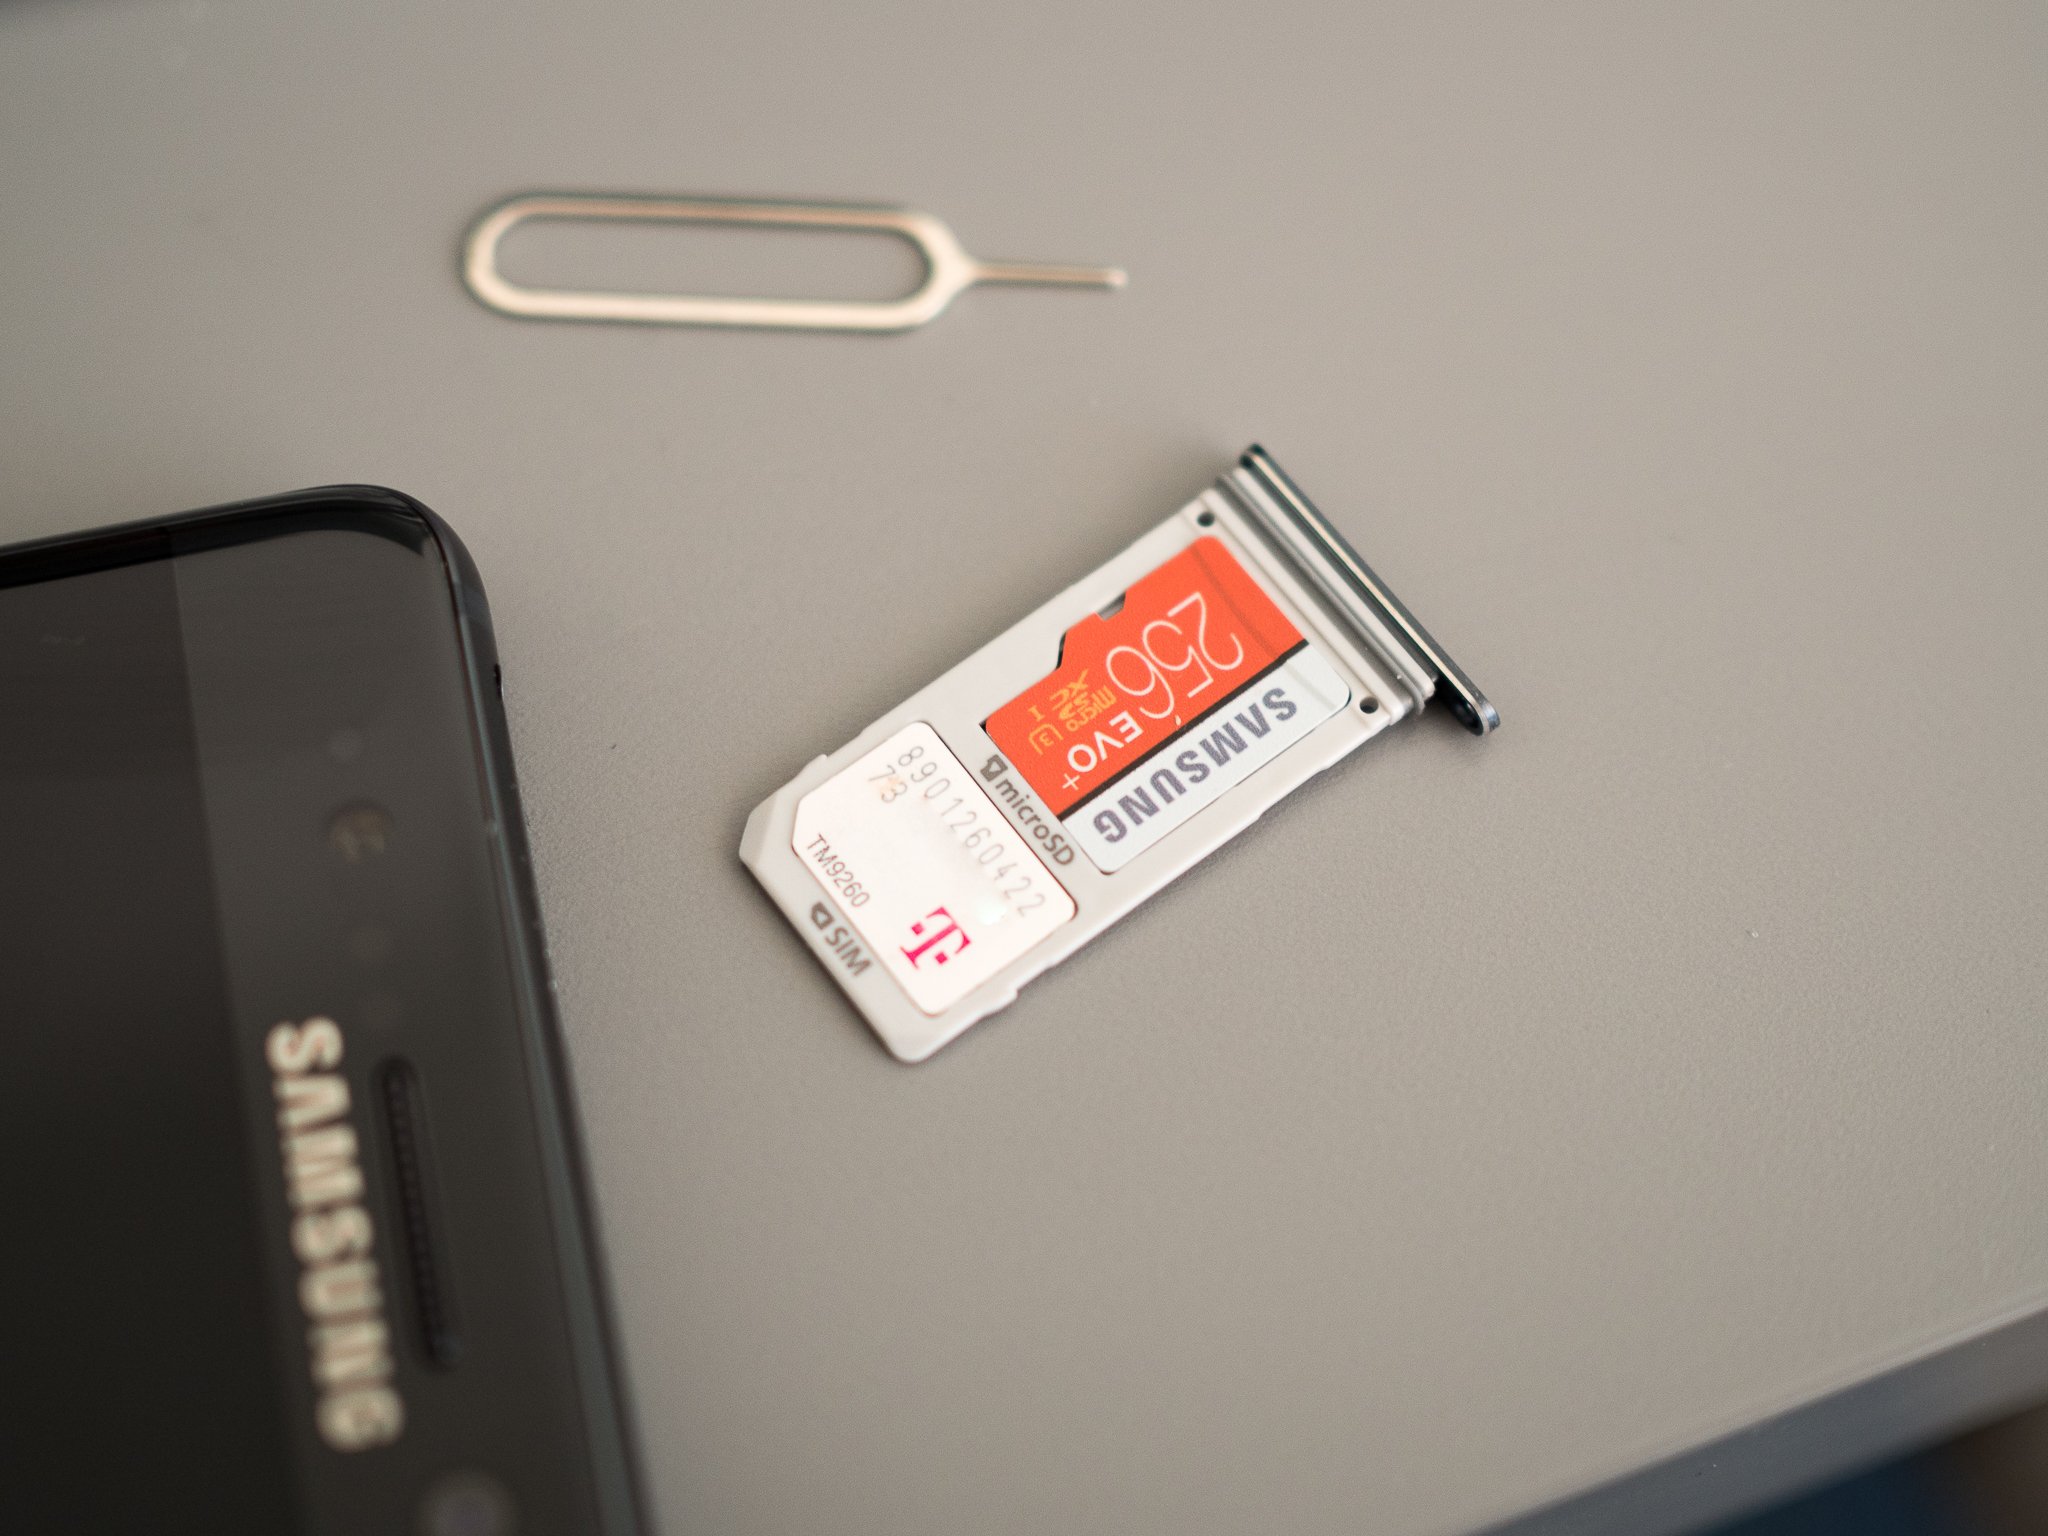 Galaxy Note 7 SD card